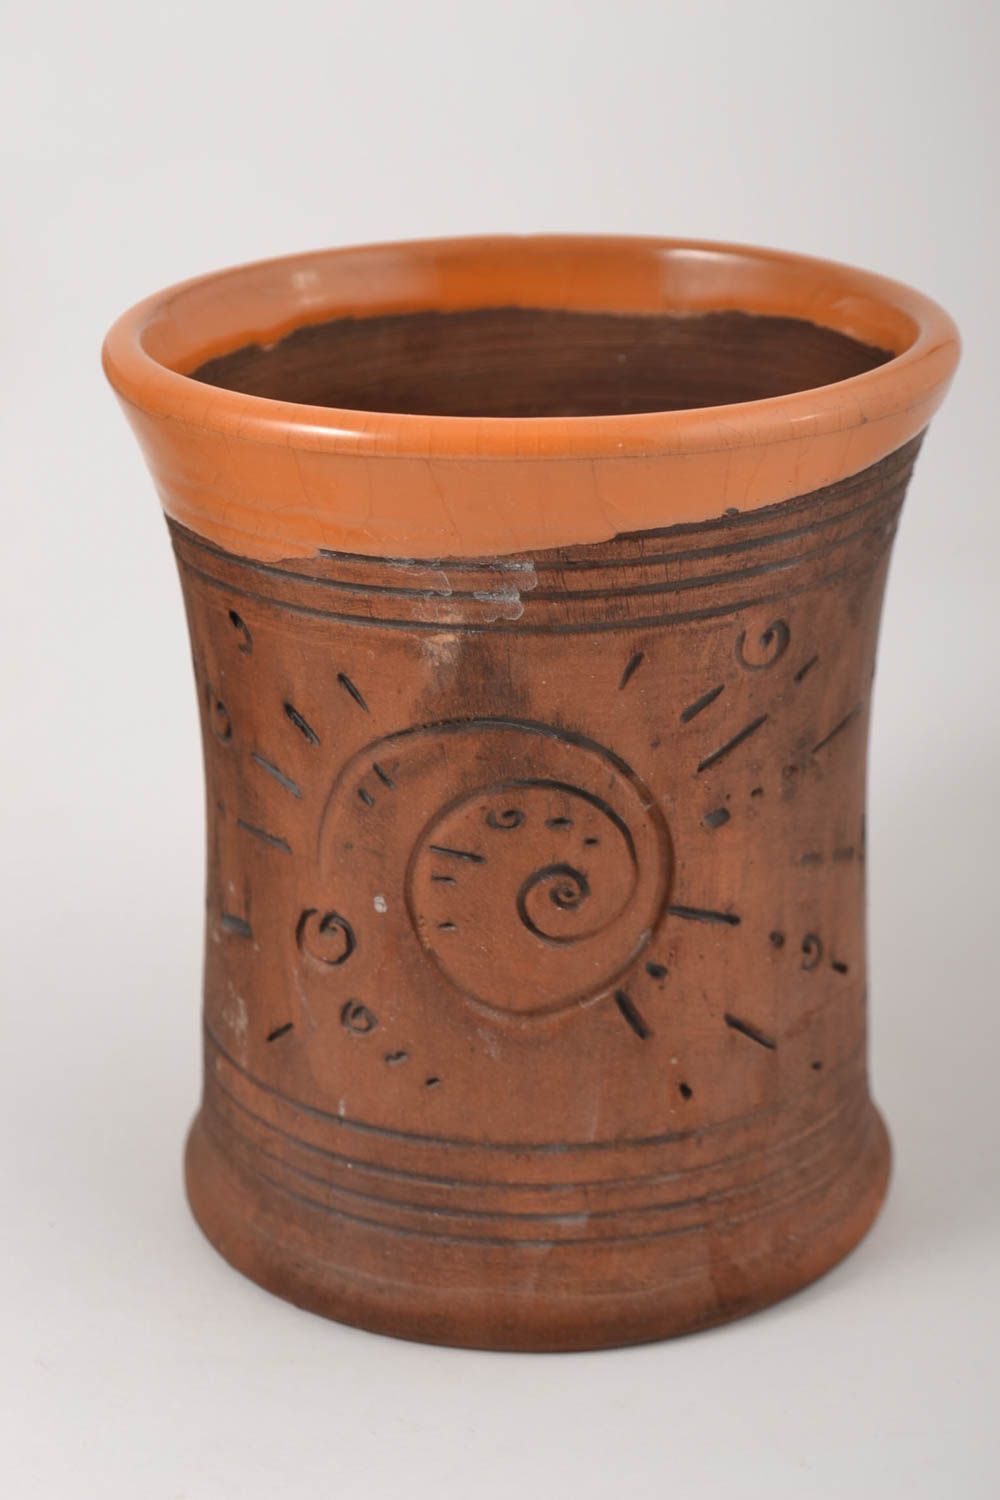 Unusual handmade ceramic beer mug table decor kitchen supplies gifts for him photo 2